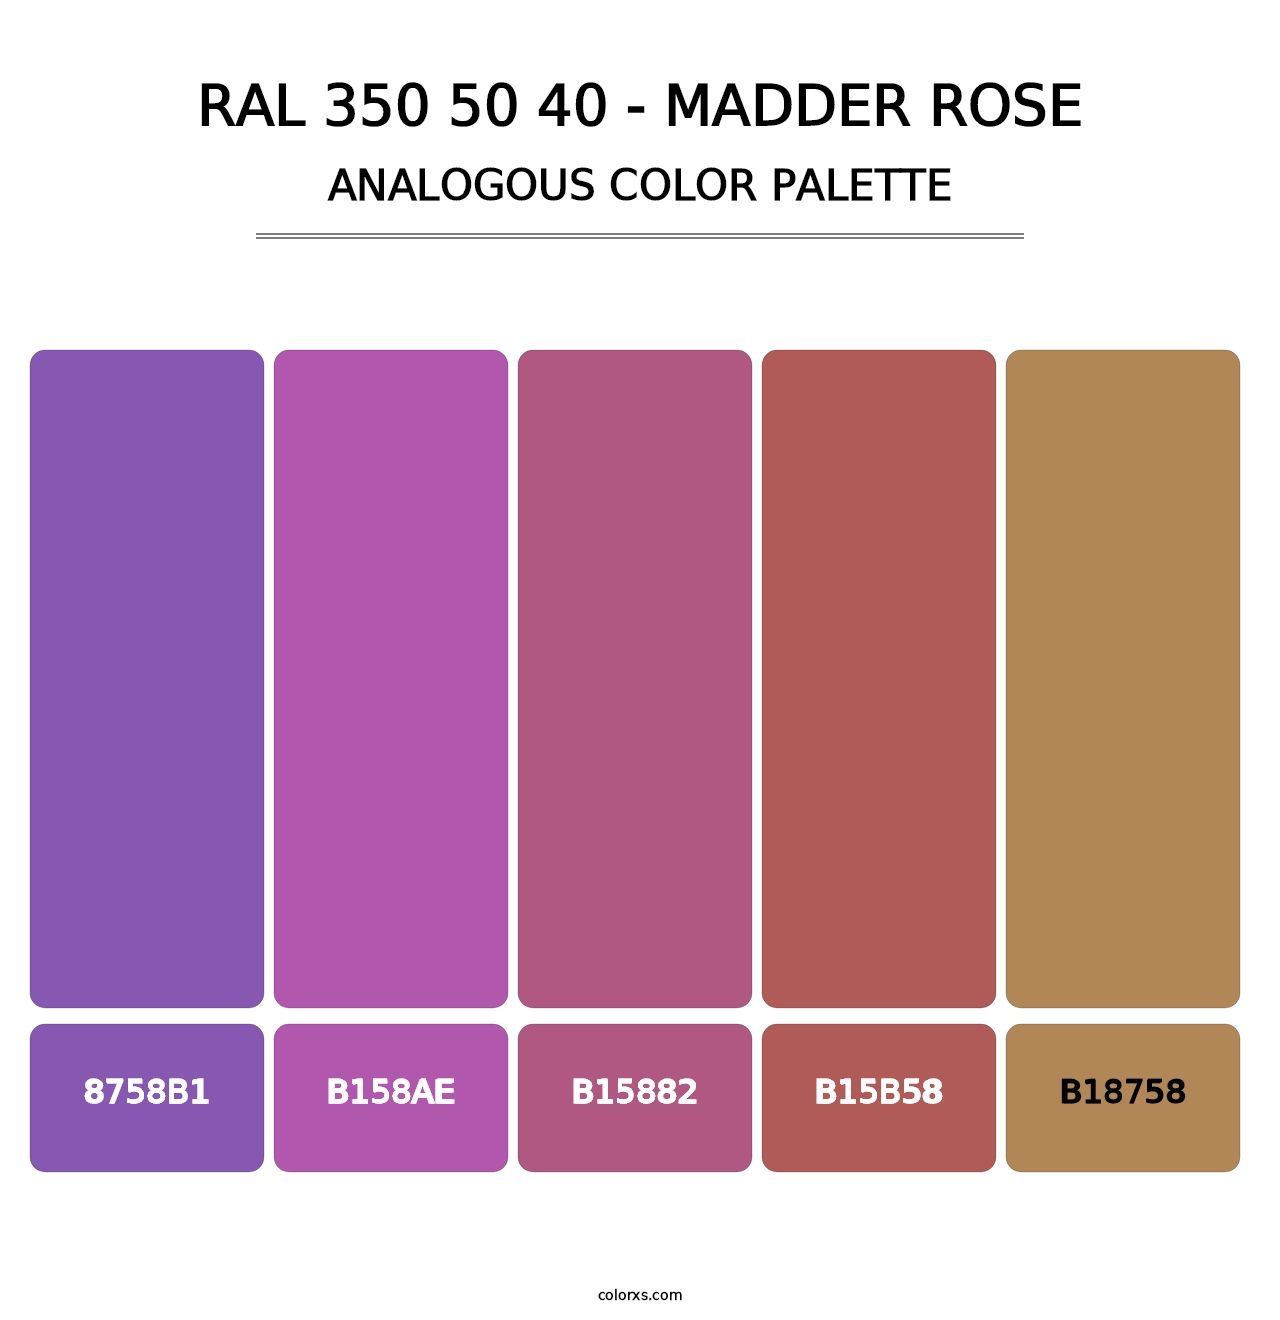 RAL 350 50 40 - Madder Rose - Analogous Color Palette